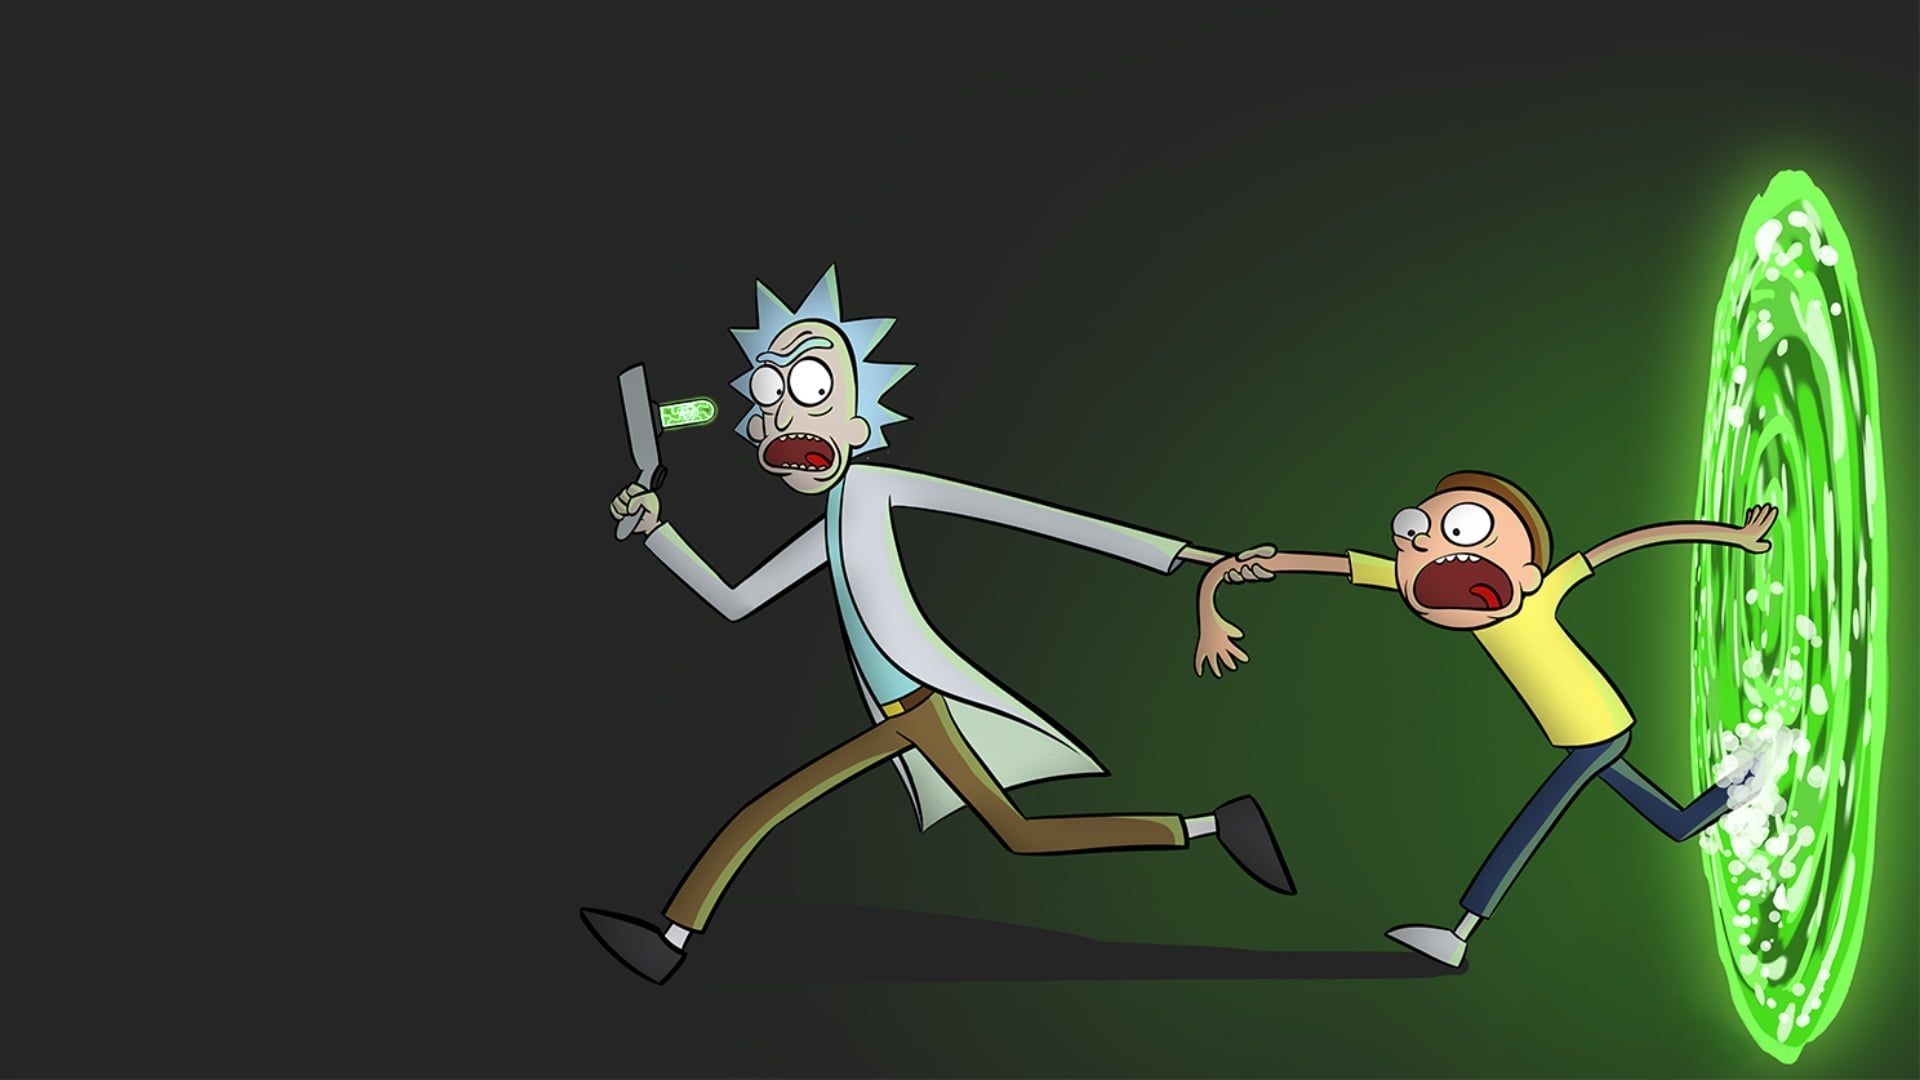 اعلام تاریخ شروع پخش فصل پنجم انیمیشن Rick and Morty؛ انتشار اولین تریلر